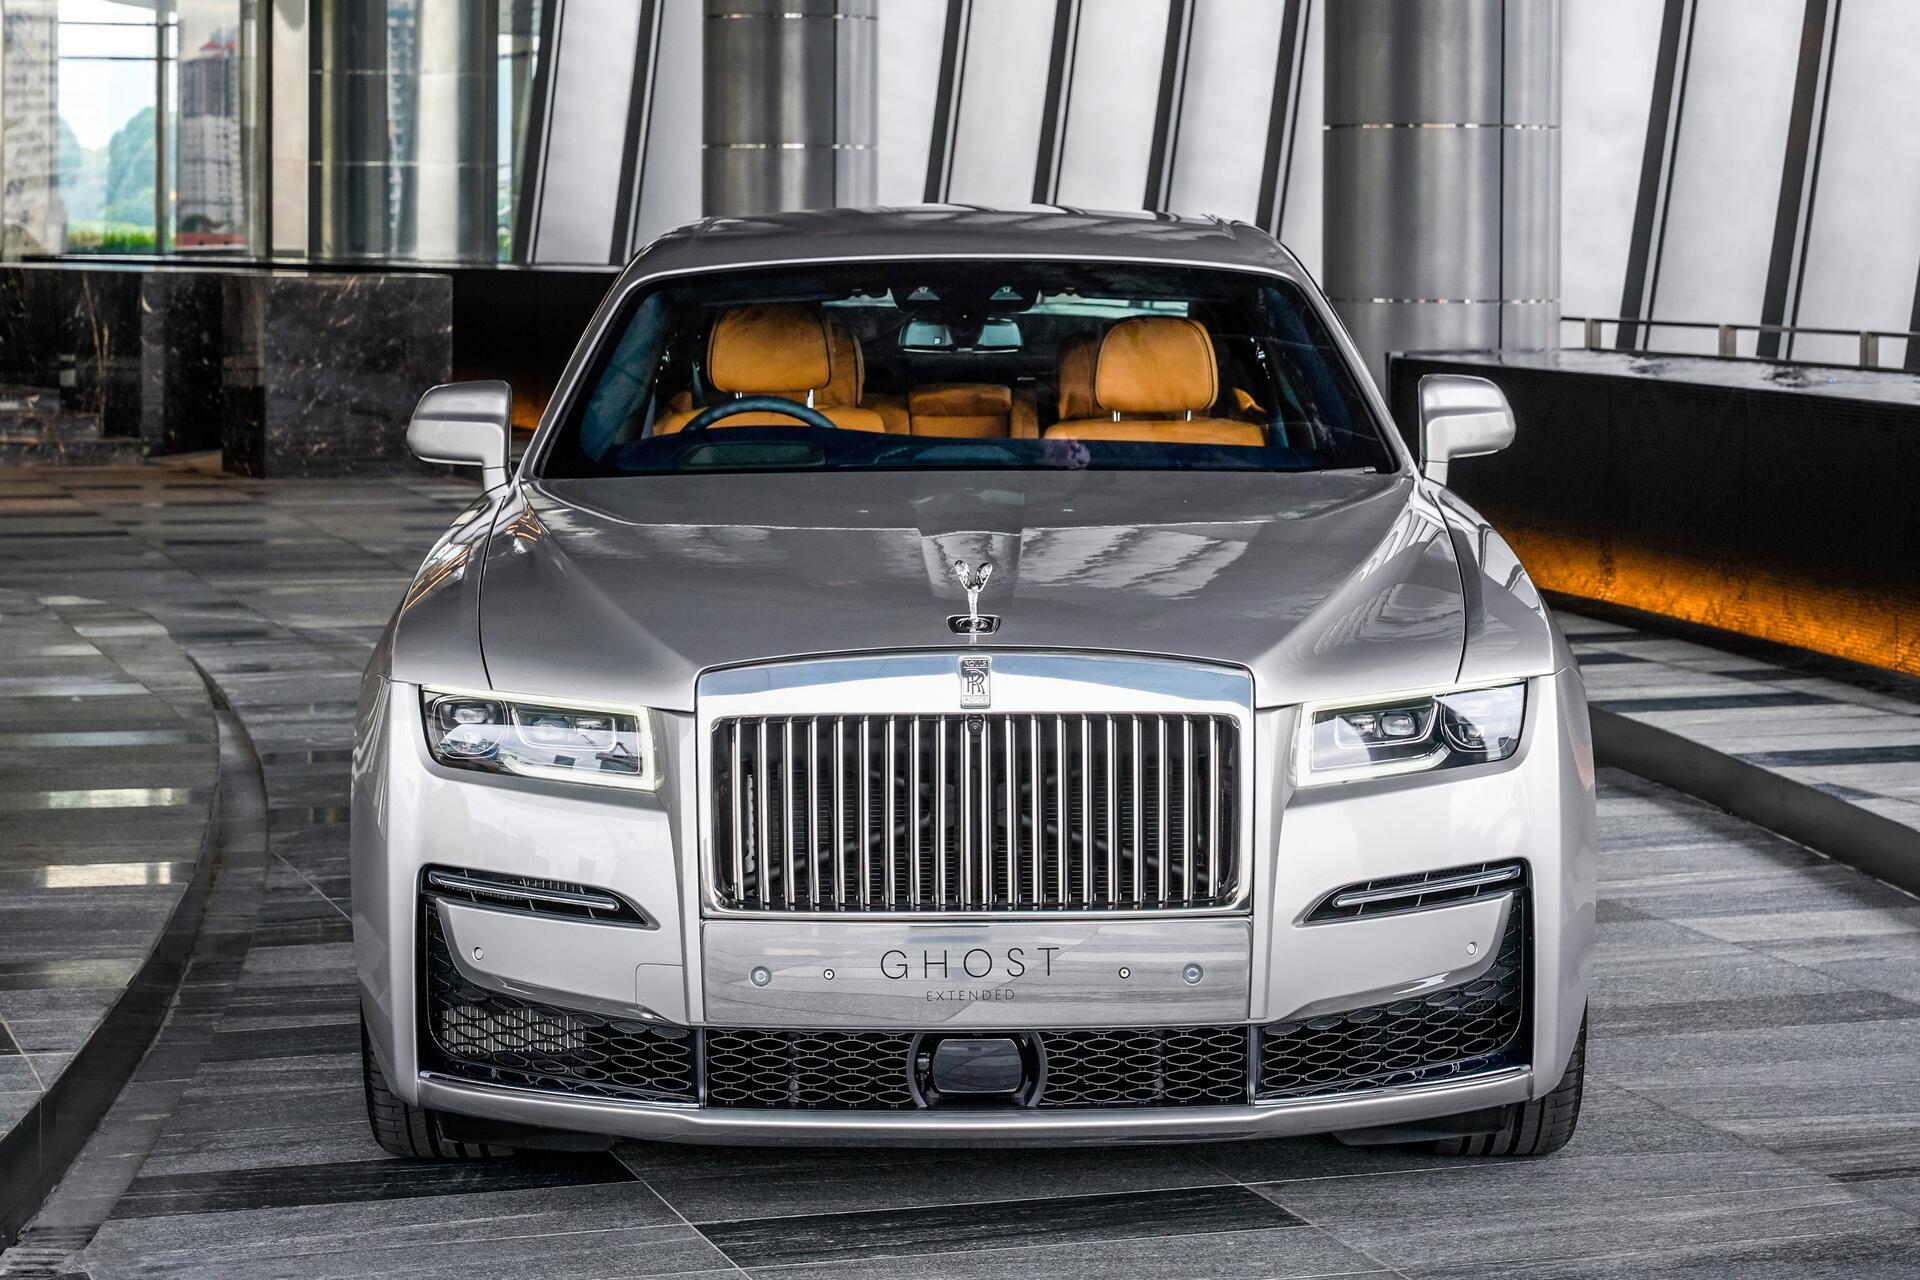 RM49000 for Aliffs Rolls Royce taxes  The Star